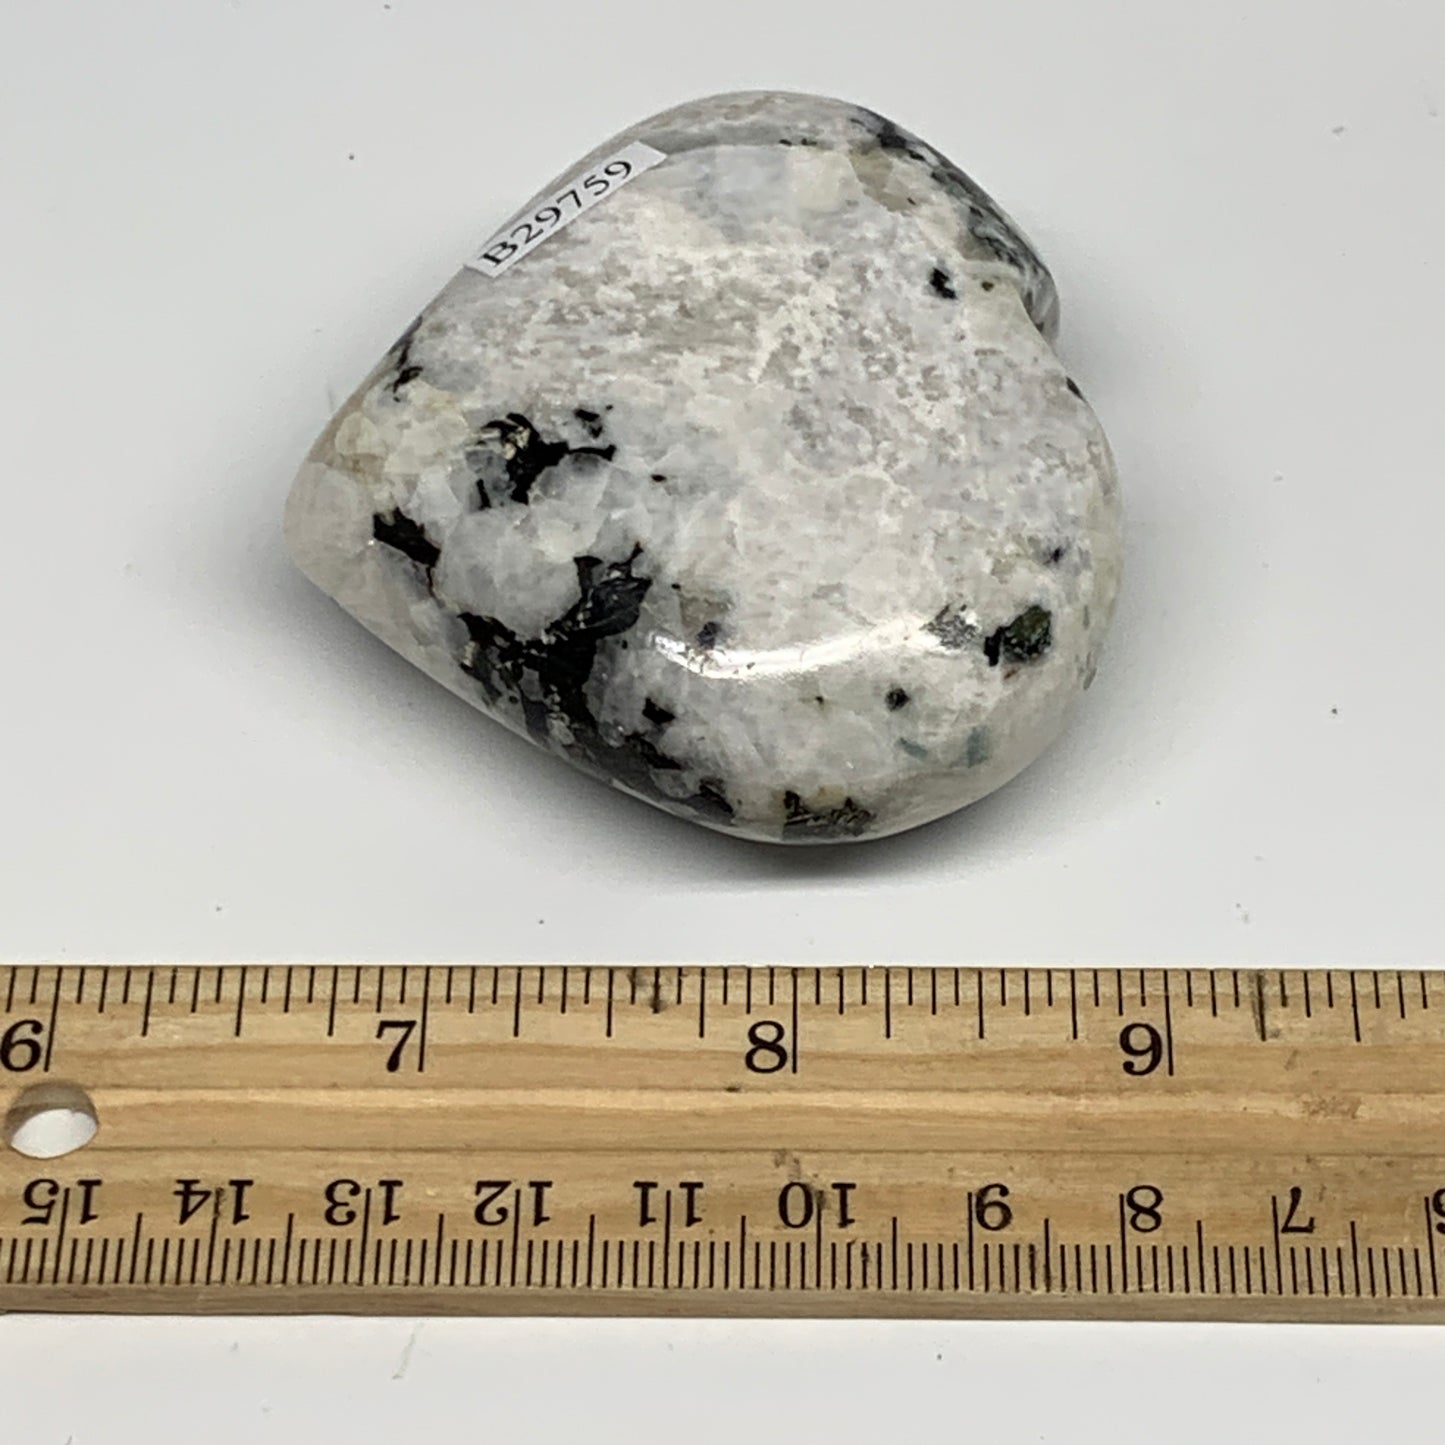 146.5g, 2.3"x2.6"x1", Rainbow Moonstone Heart Crystal Gemstone @India, B29759